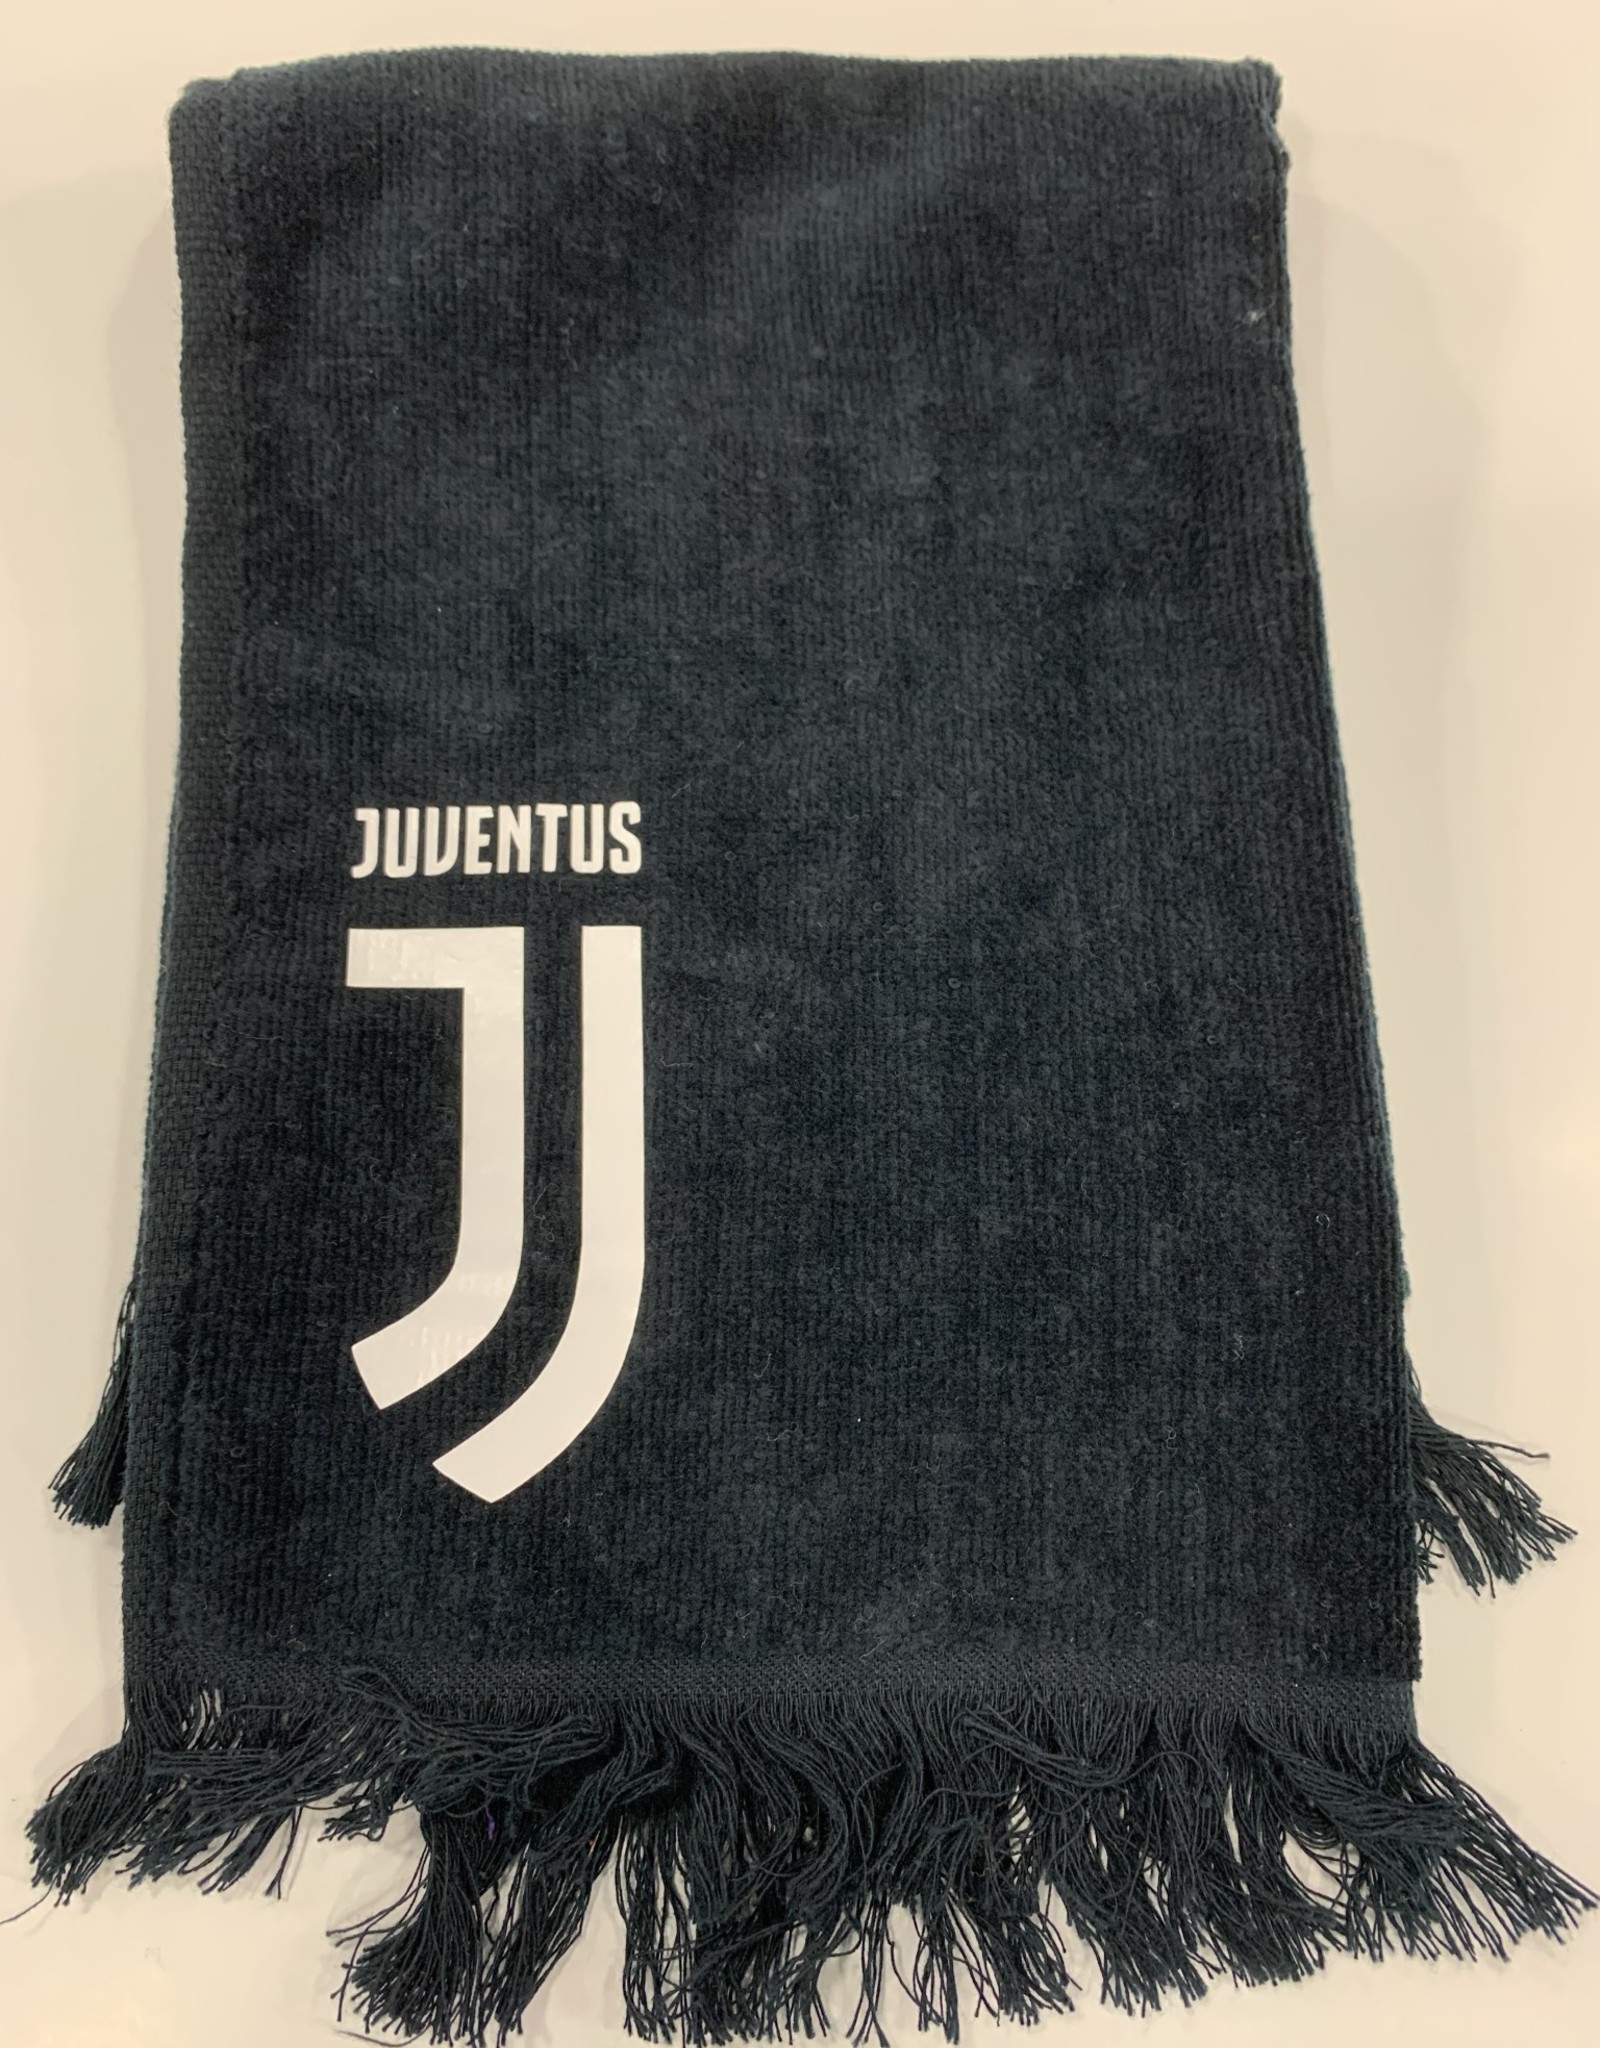 Gildan Gildan Fringed Spirit Towel with Juventus Logo